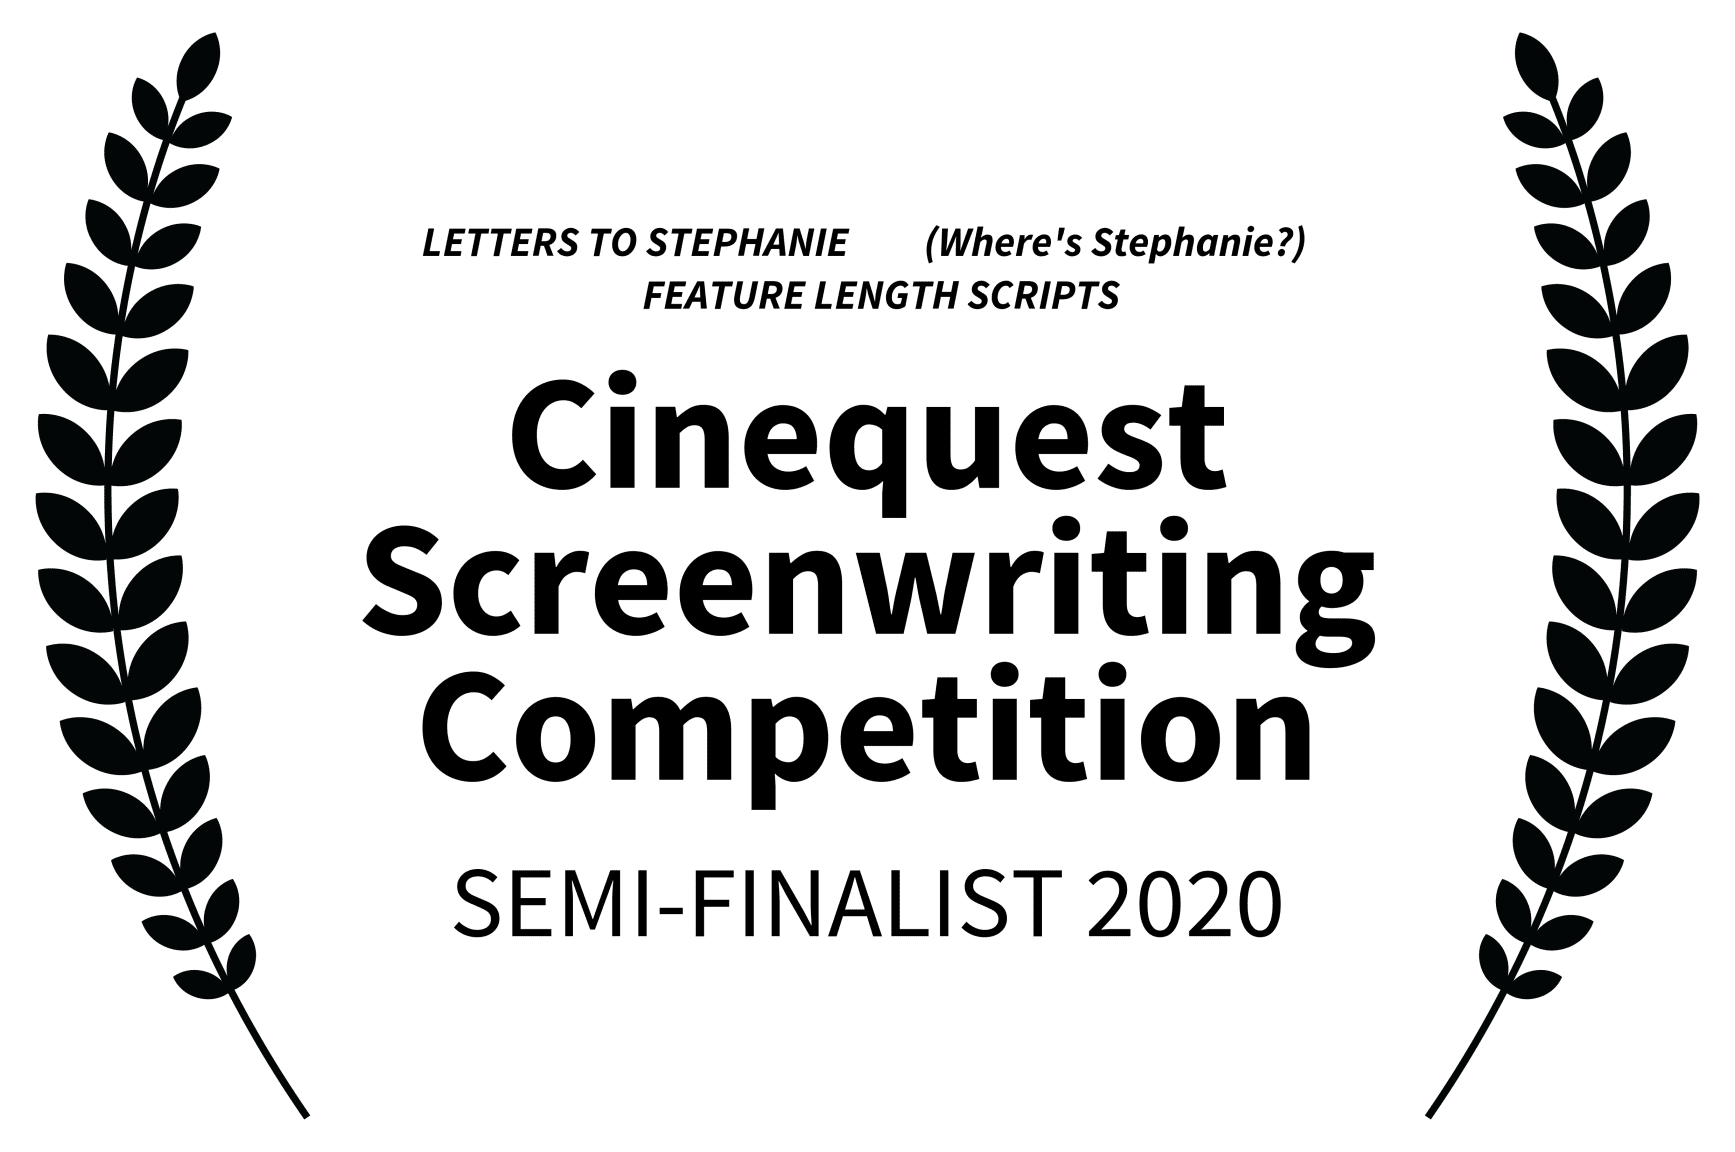 Cinequest Screenwriting Competition semi finalist